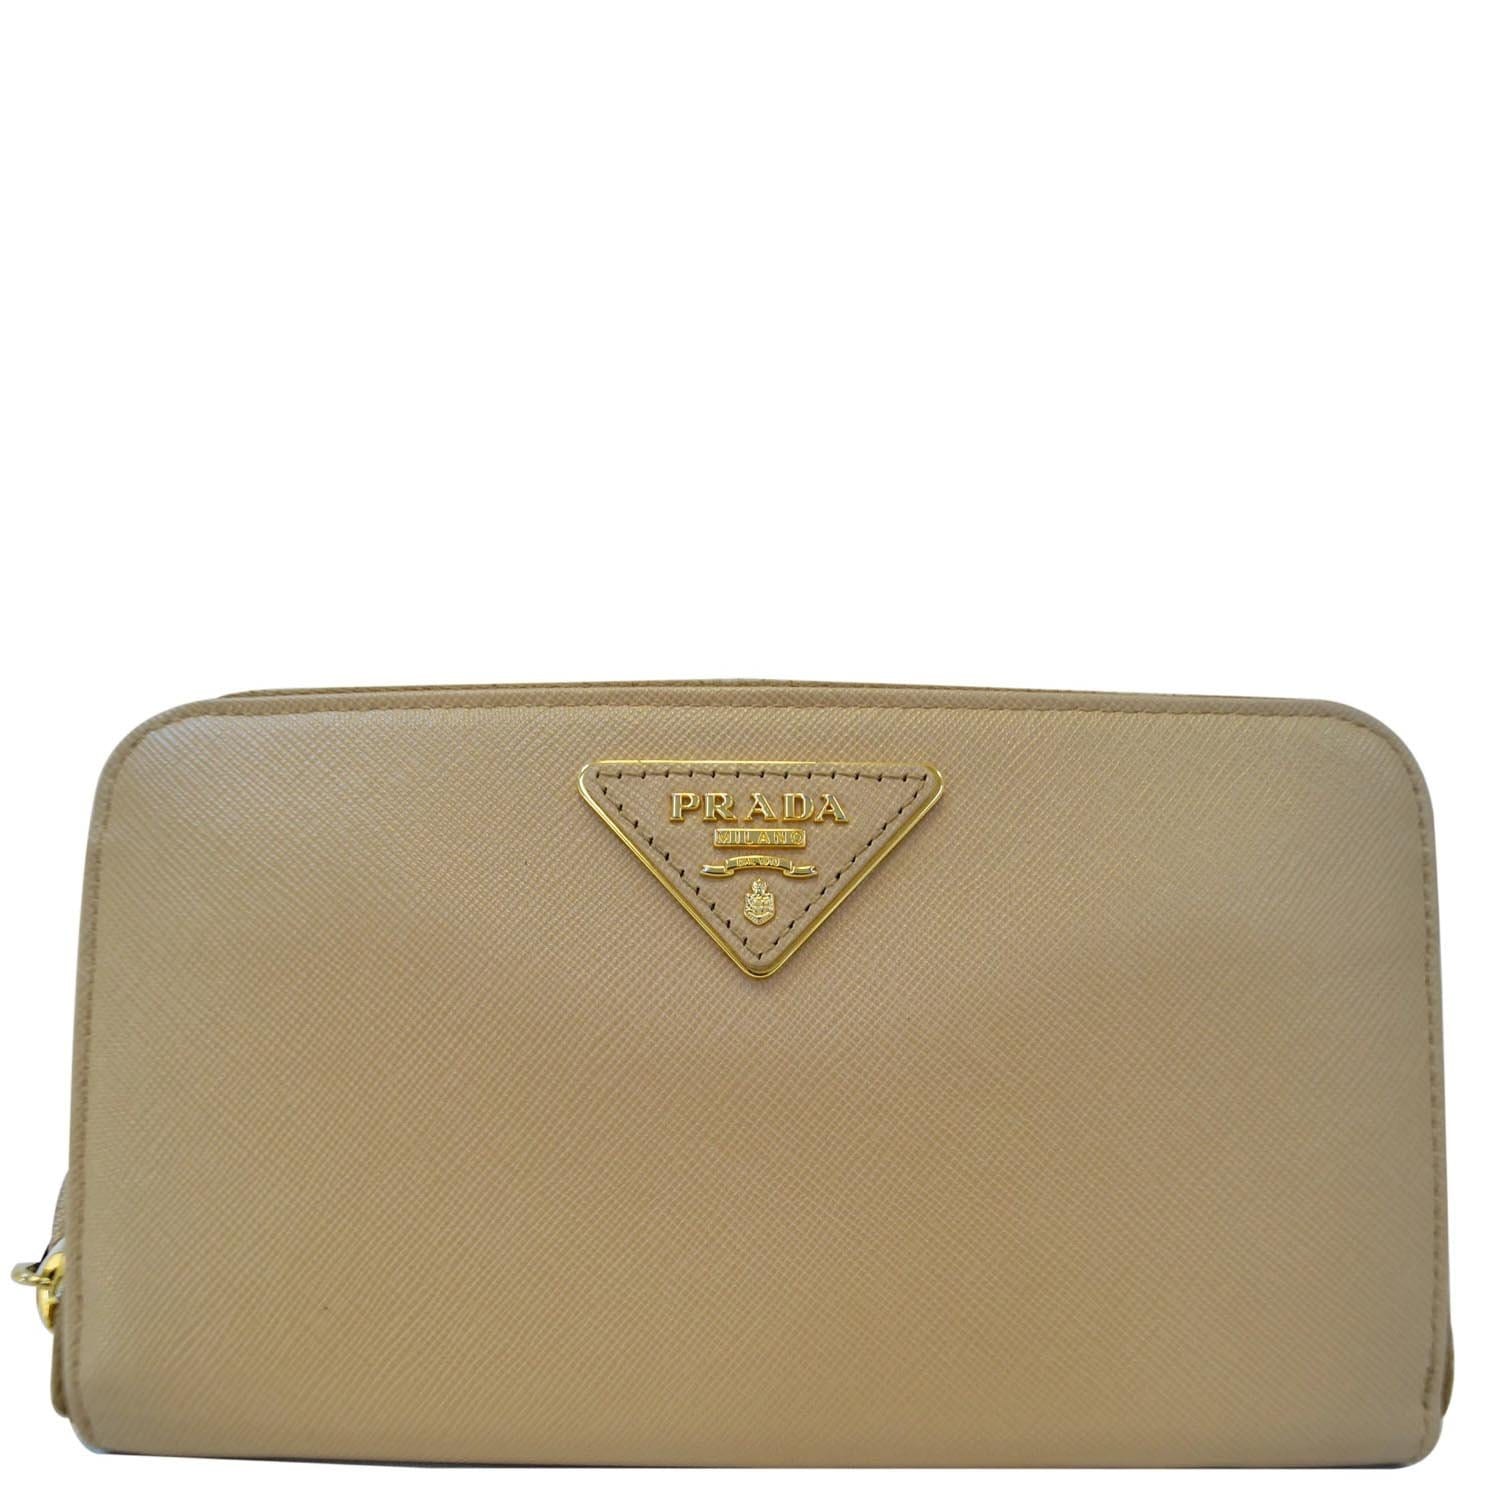 Prada Saffiano Leather Wallet | Prada Zipped Beige Ladies Wallet